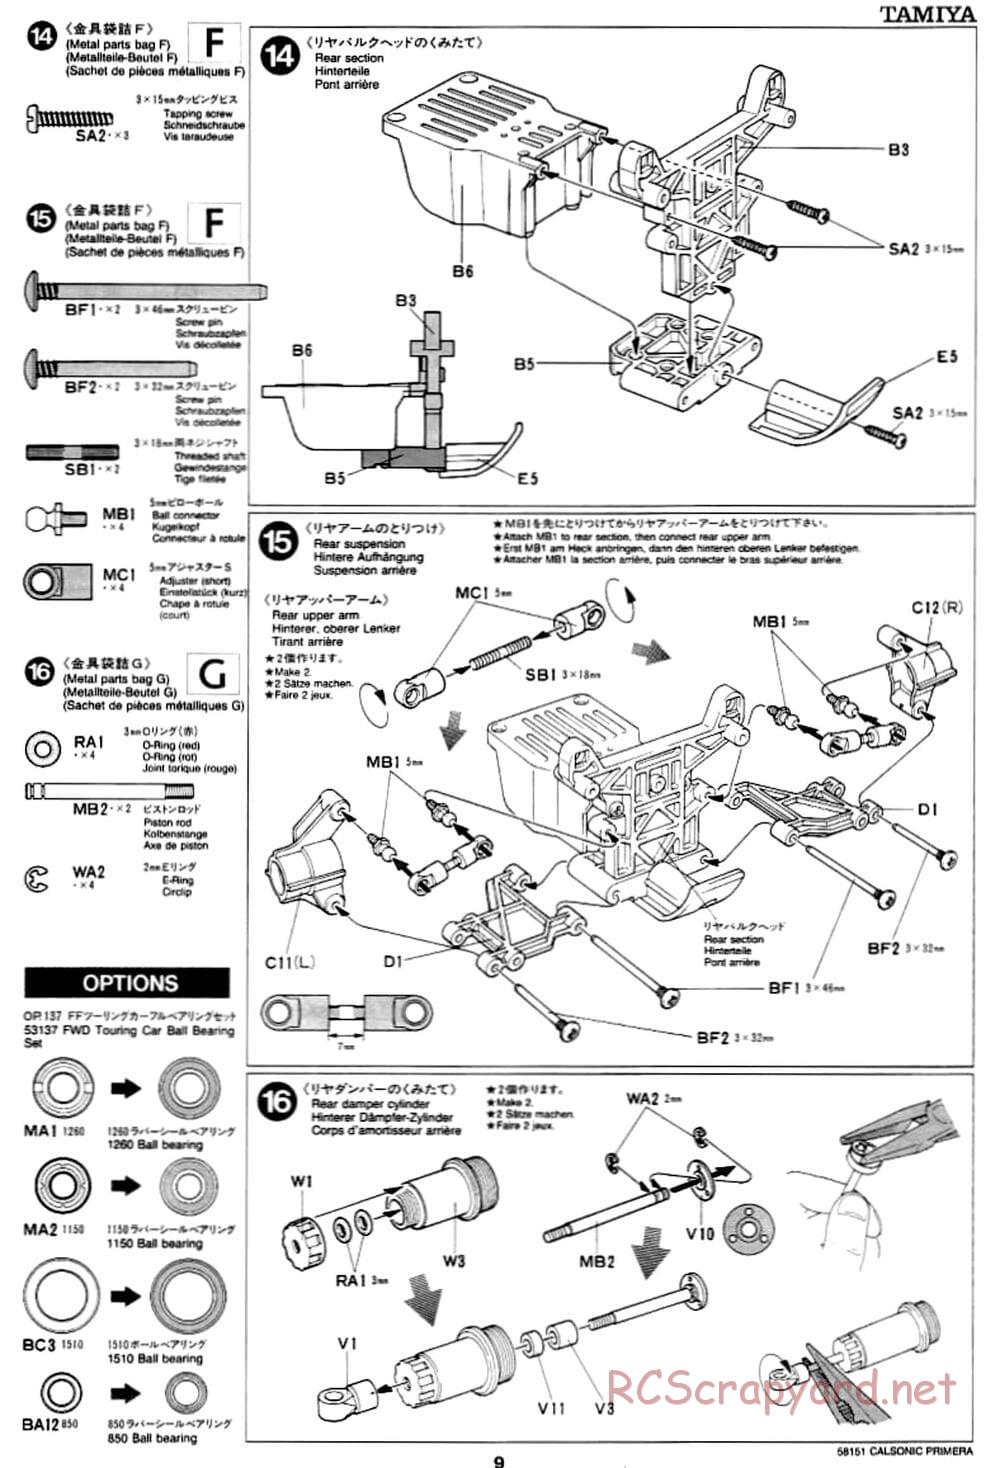 Tamiya - Calsonic Nissan Primera JTCC - FF-01 Chassis - Manual - Page 9